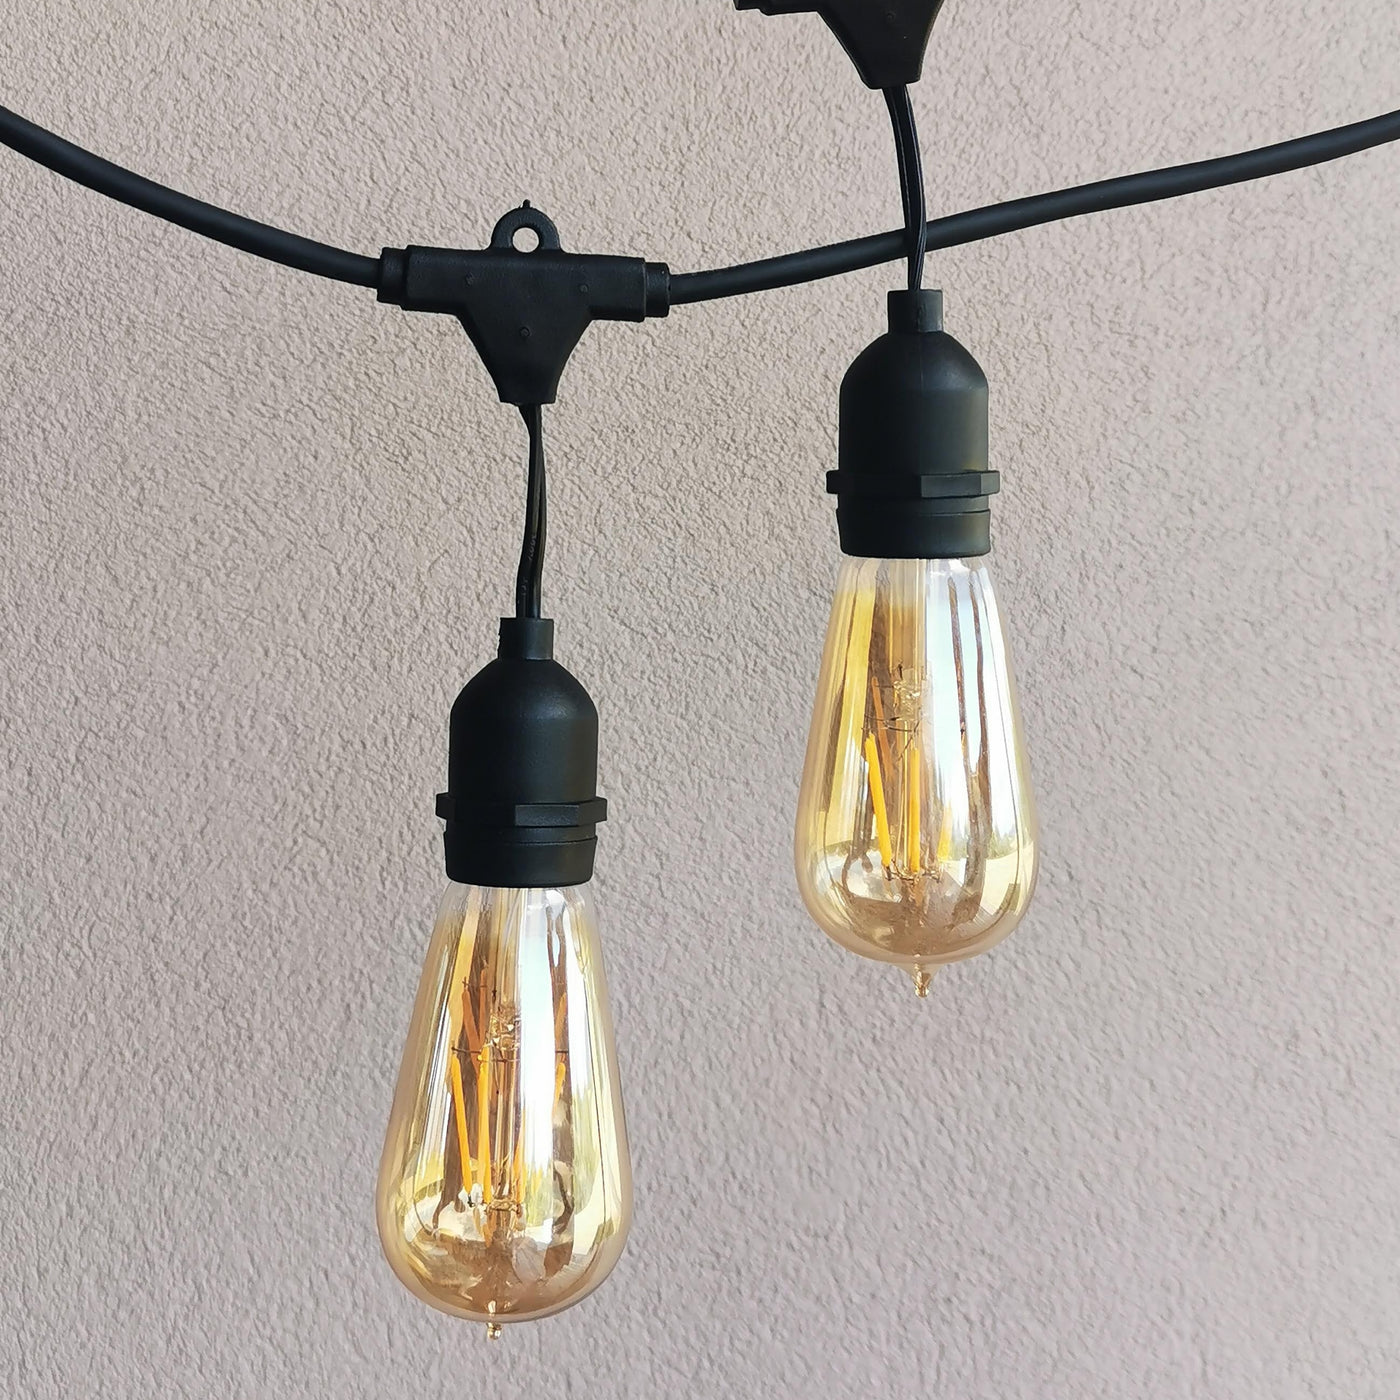 Drop Hang | 10m 10 Bulbs | ST58 5w Amber Glass | Dimmable Festoon Lights